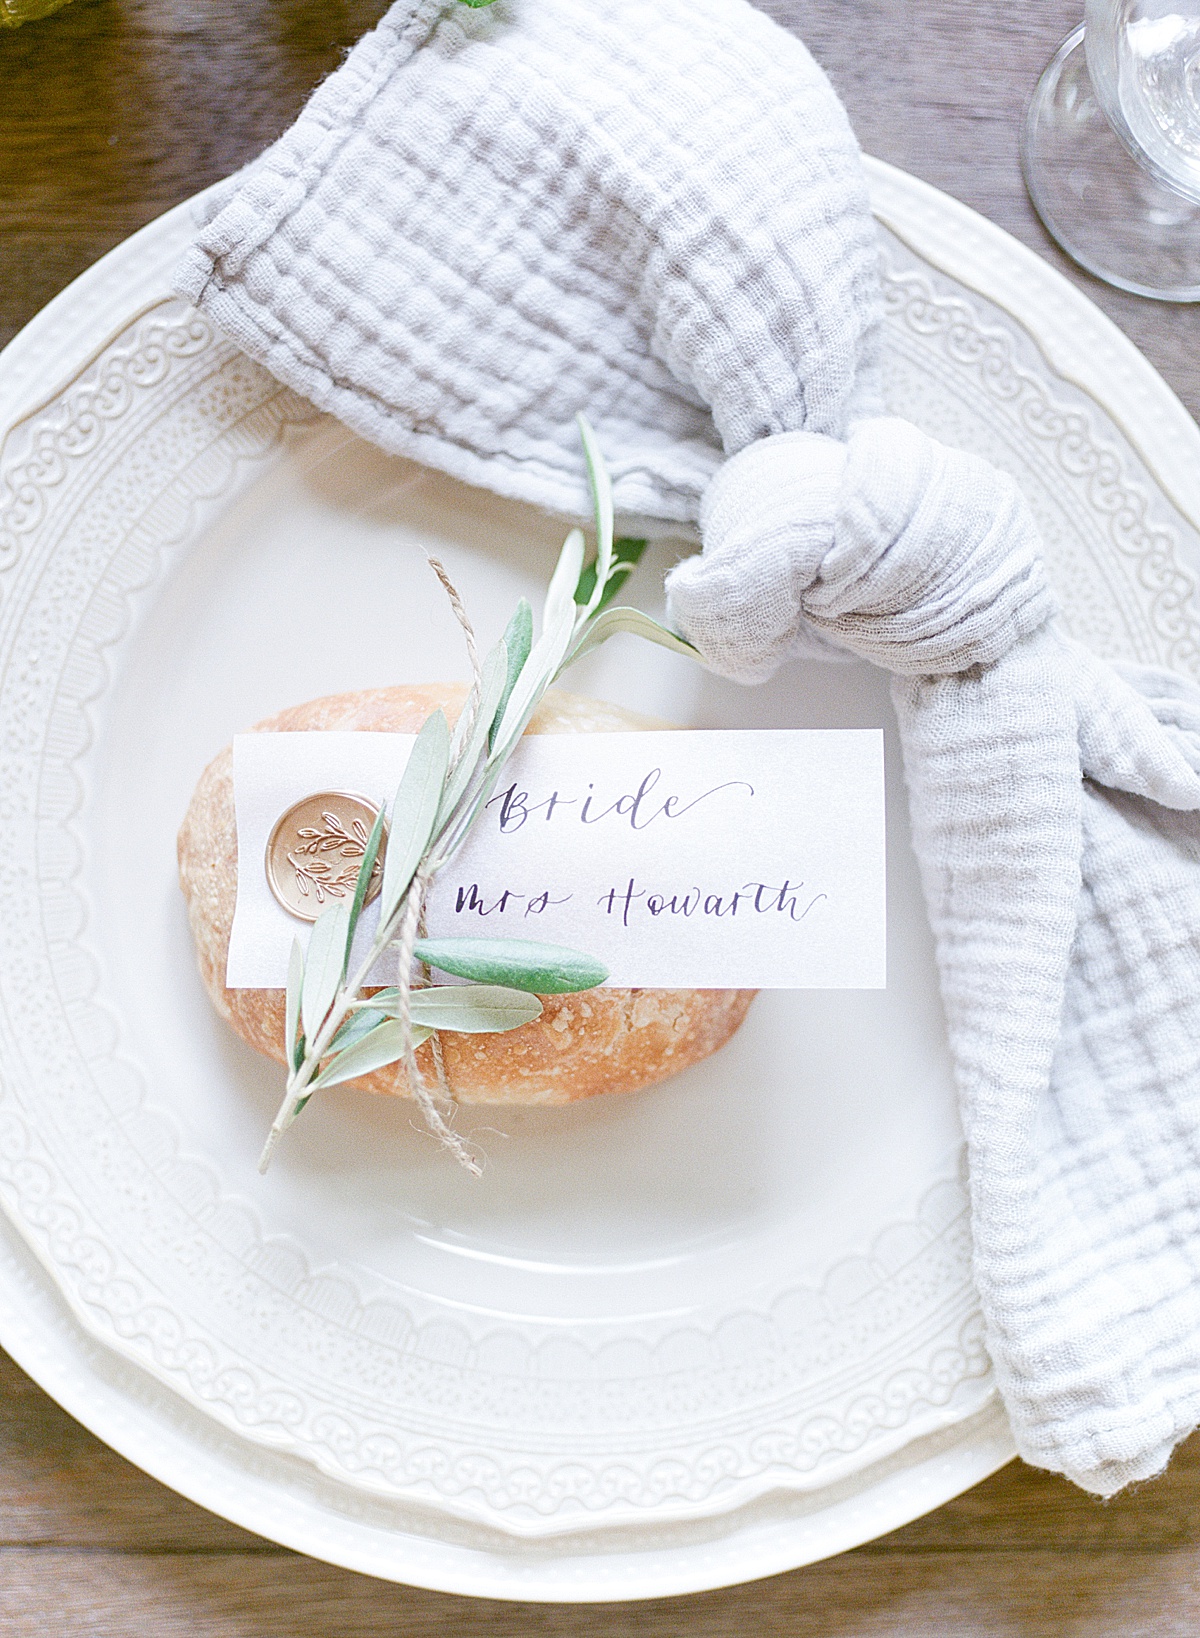 The Ridge Asheville Wedding Venue Reception Tabletop Baguette on Plate setting Photo